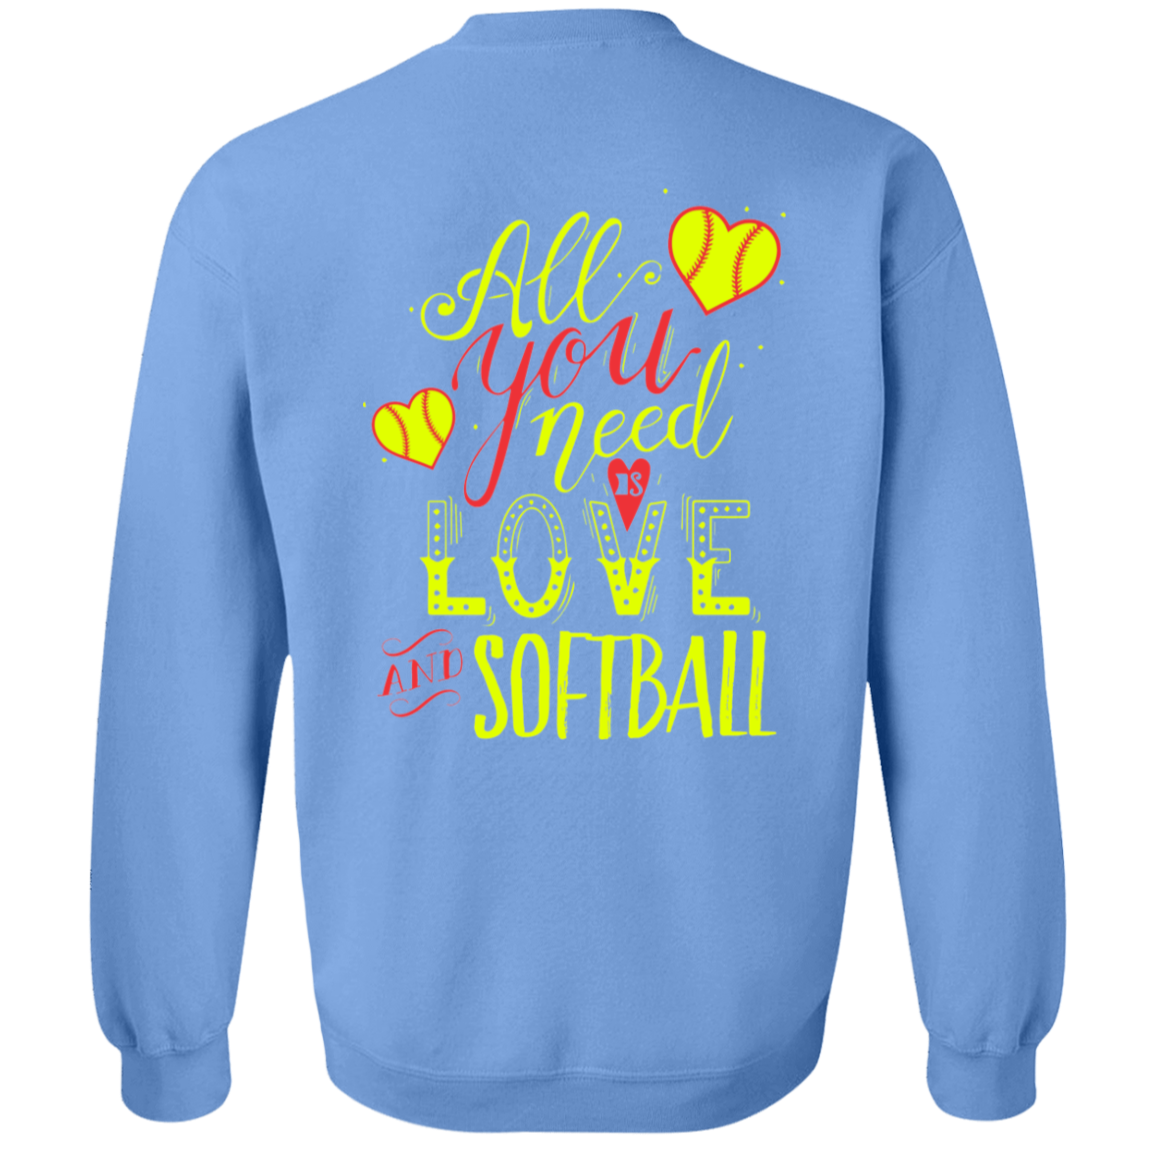 All you need is love Premium Crew Neck Sweatshirt